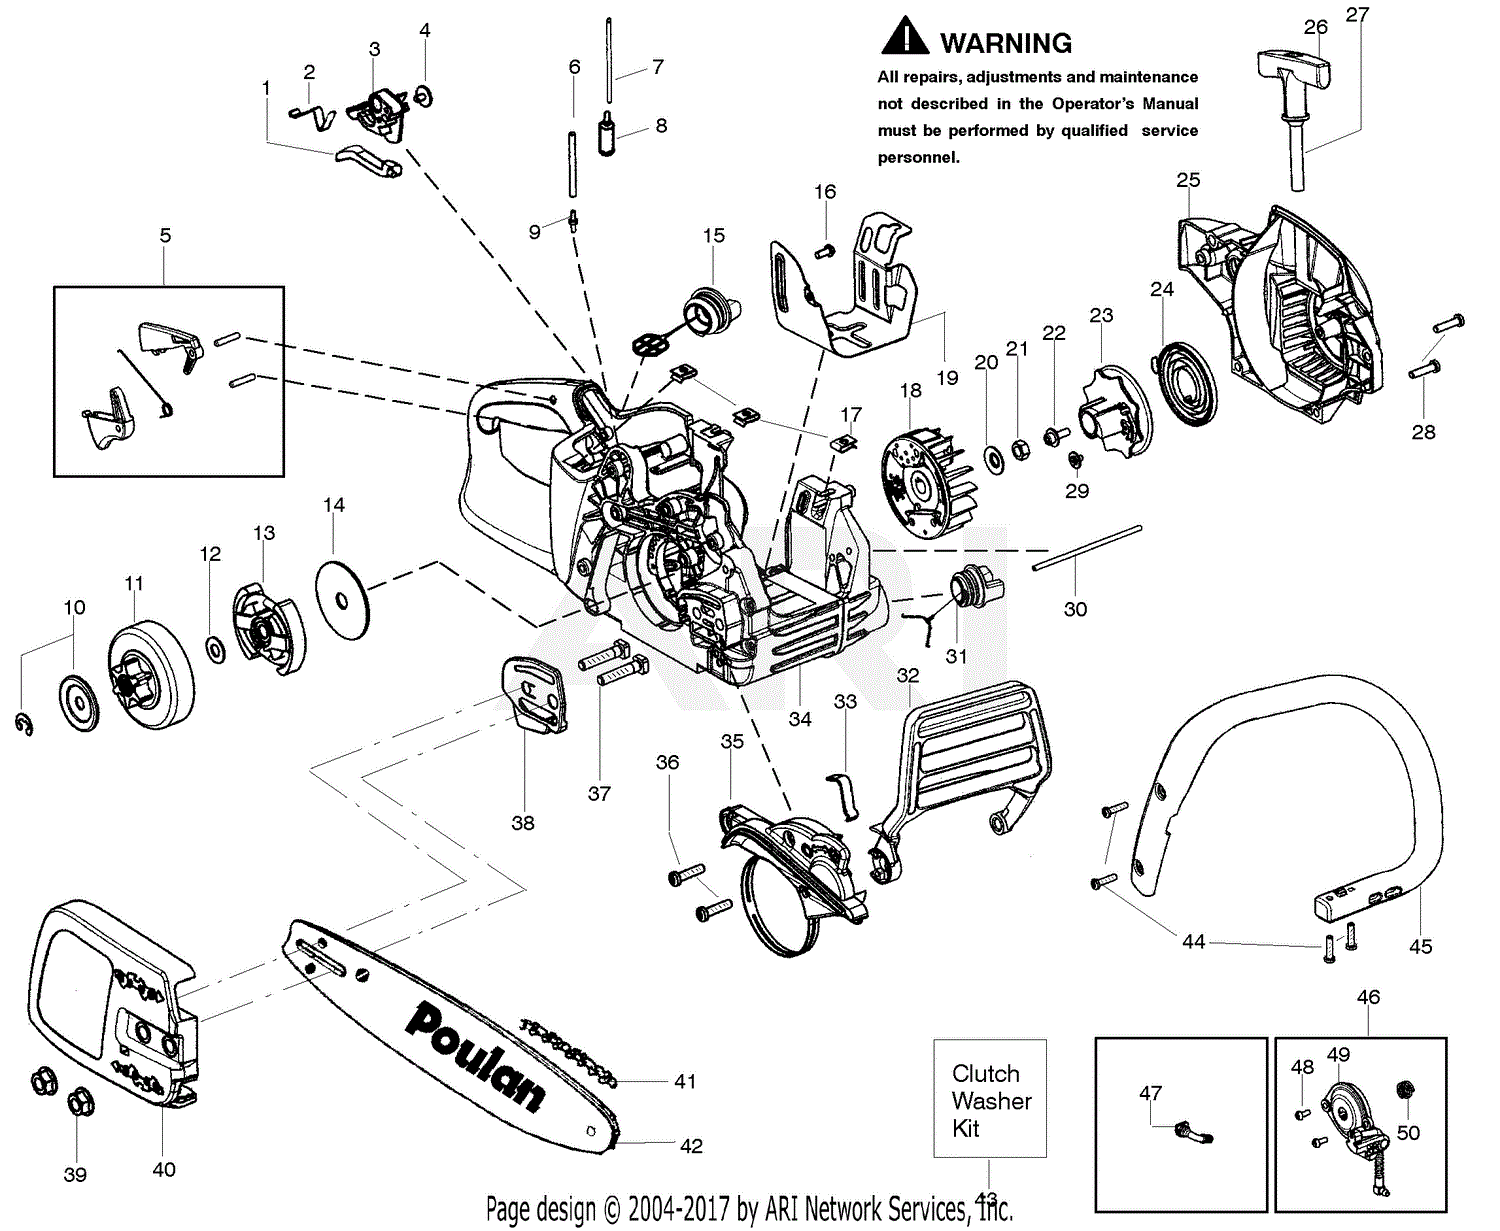 Poulan P4018WTL Gas Chain Saw, 4018WTL - Poulan Parts ... husqvarna 55 chainsaw engine diagrams 